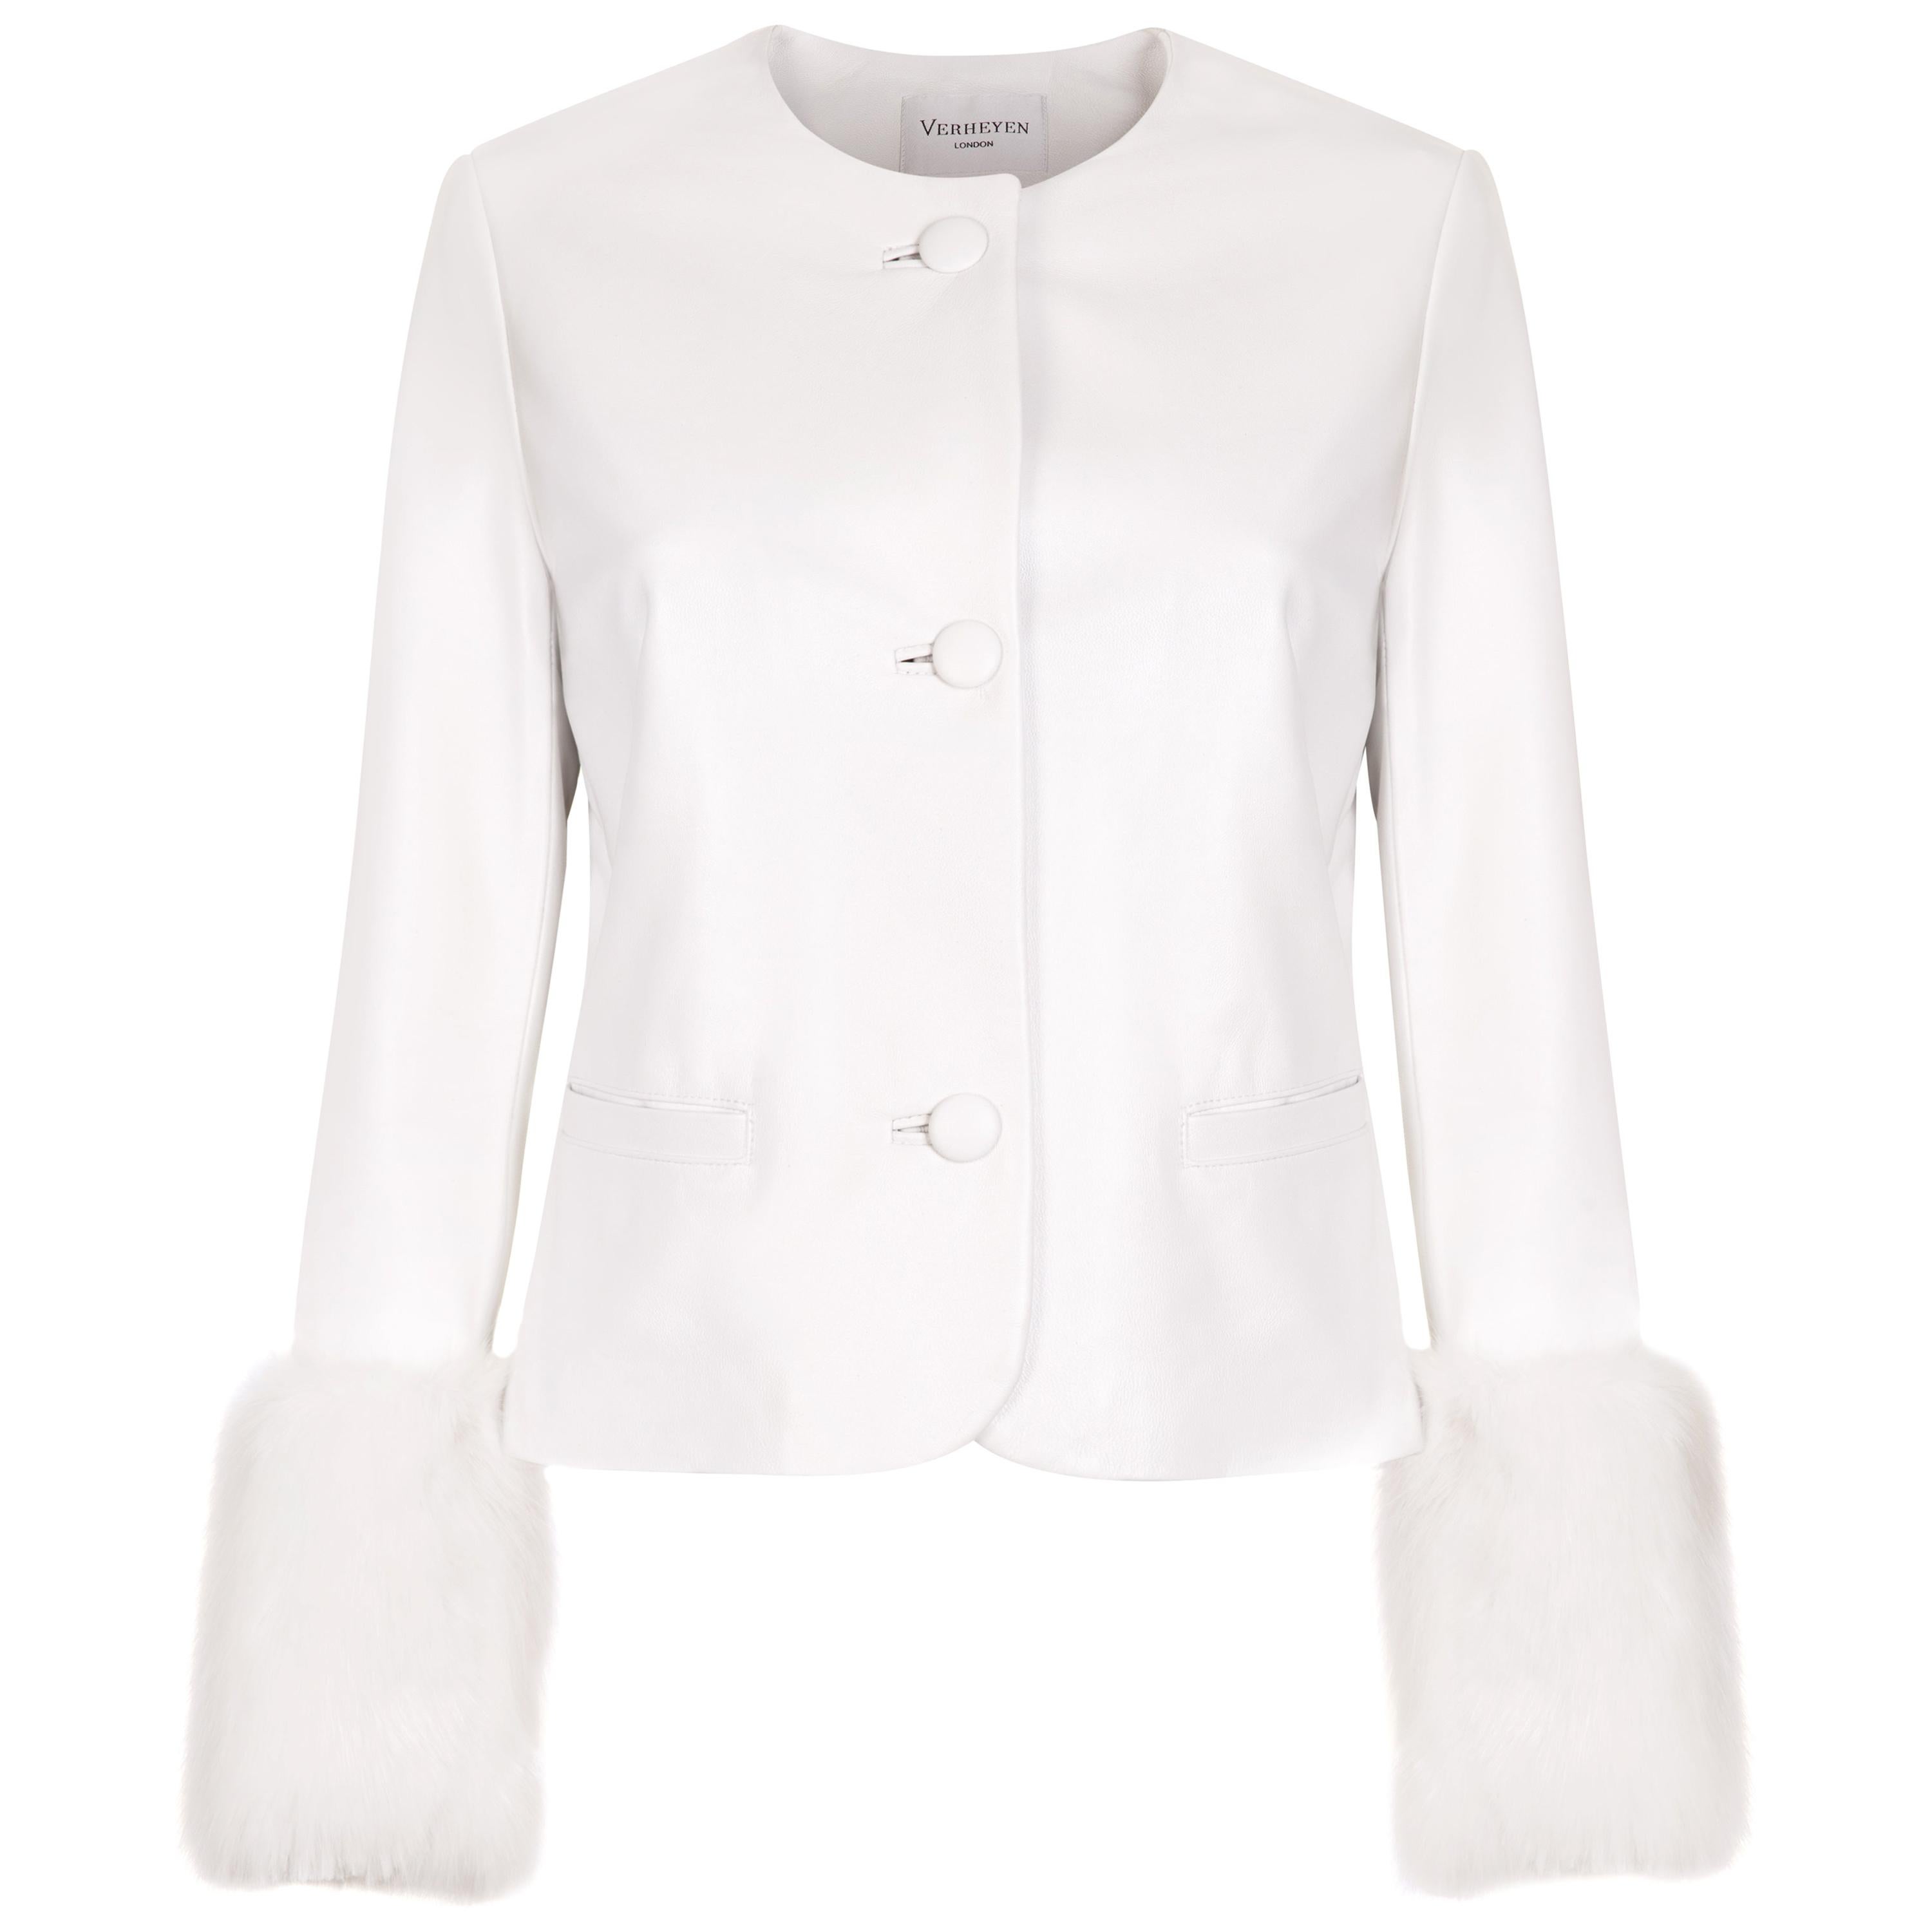 Veste courte Vita Verheyen en cuir blanc avec fausse fourrure - Taille UK 10